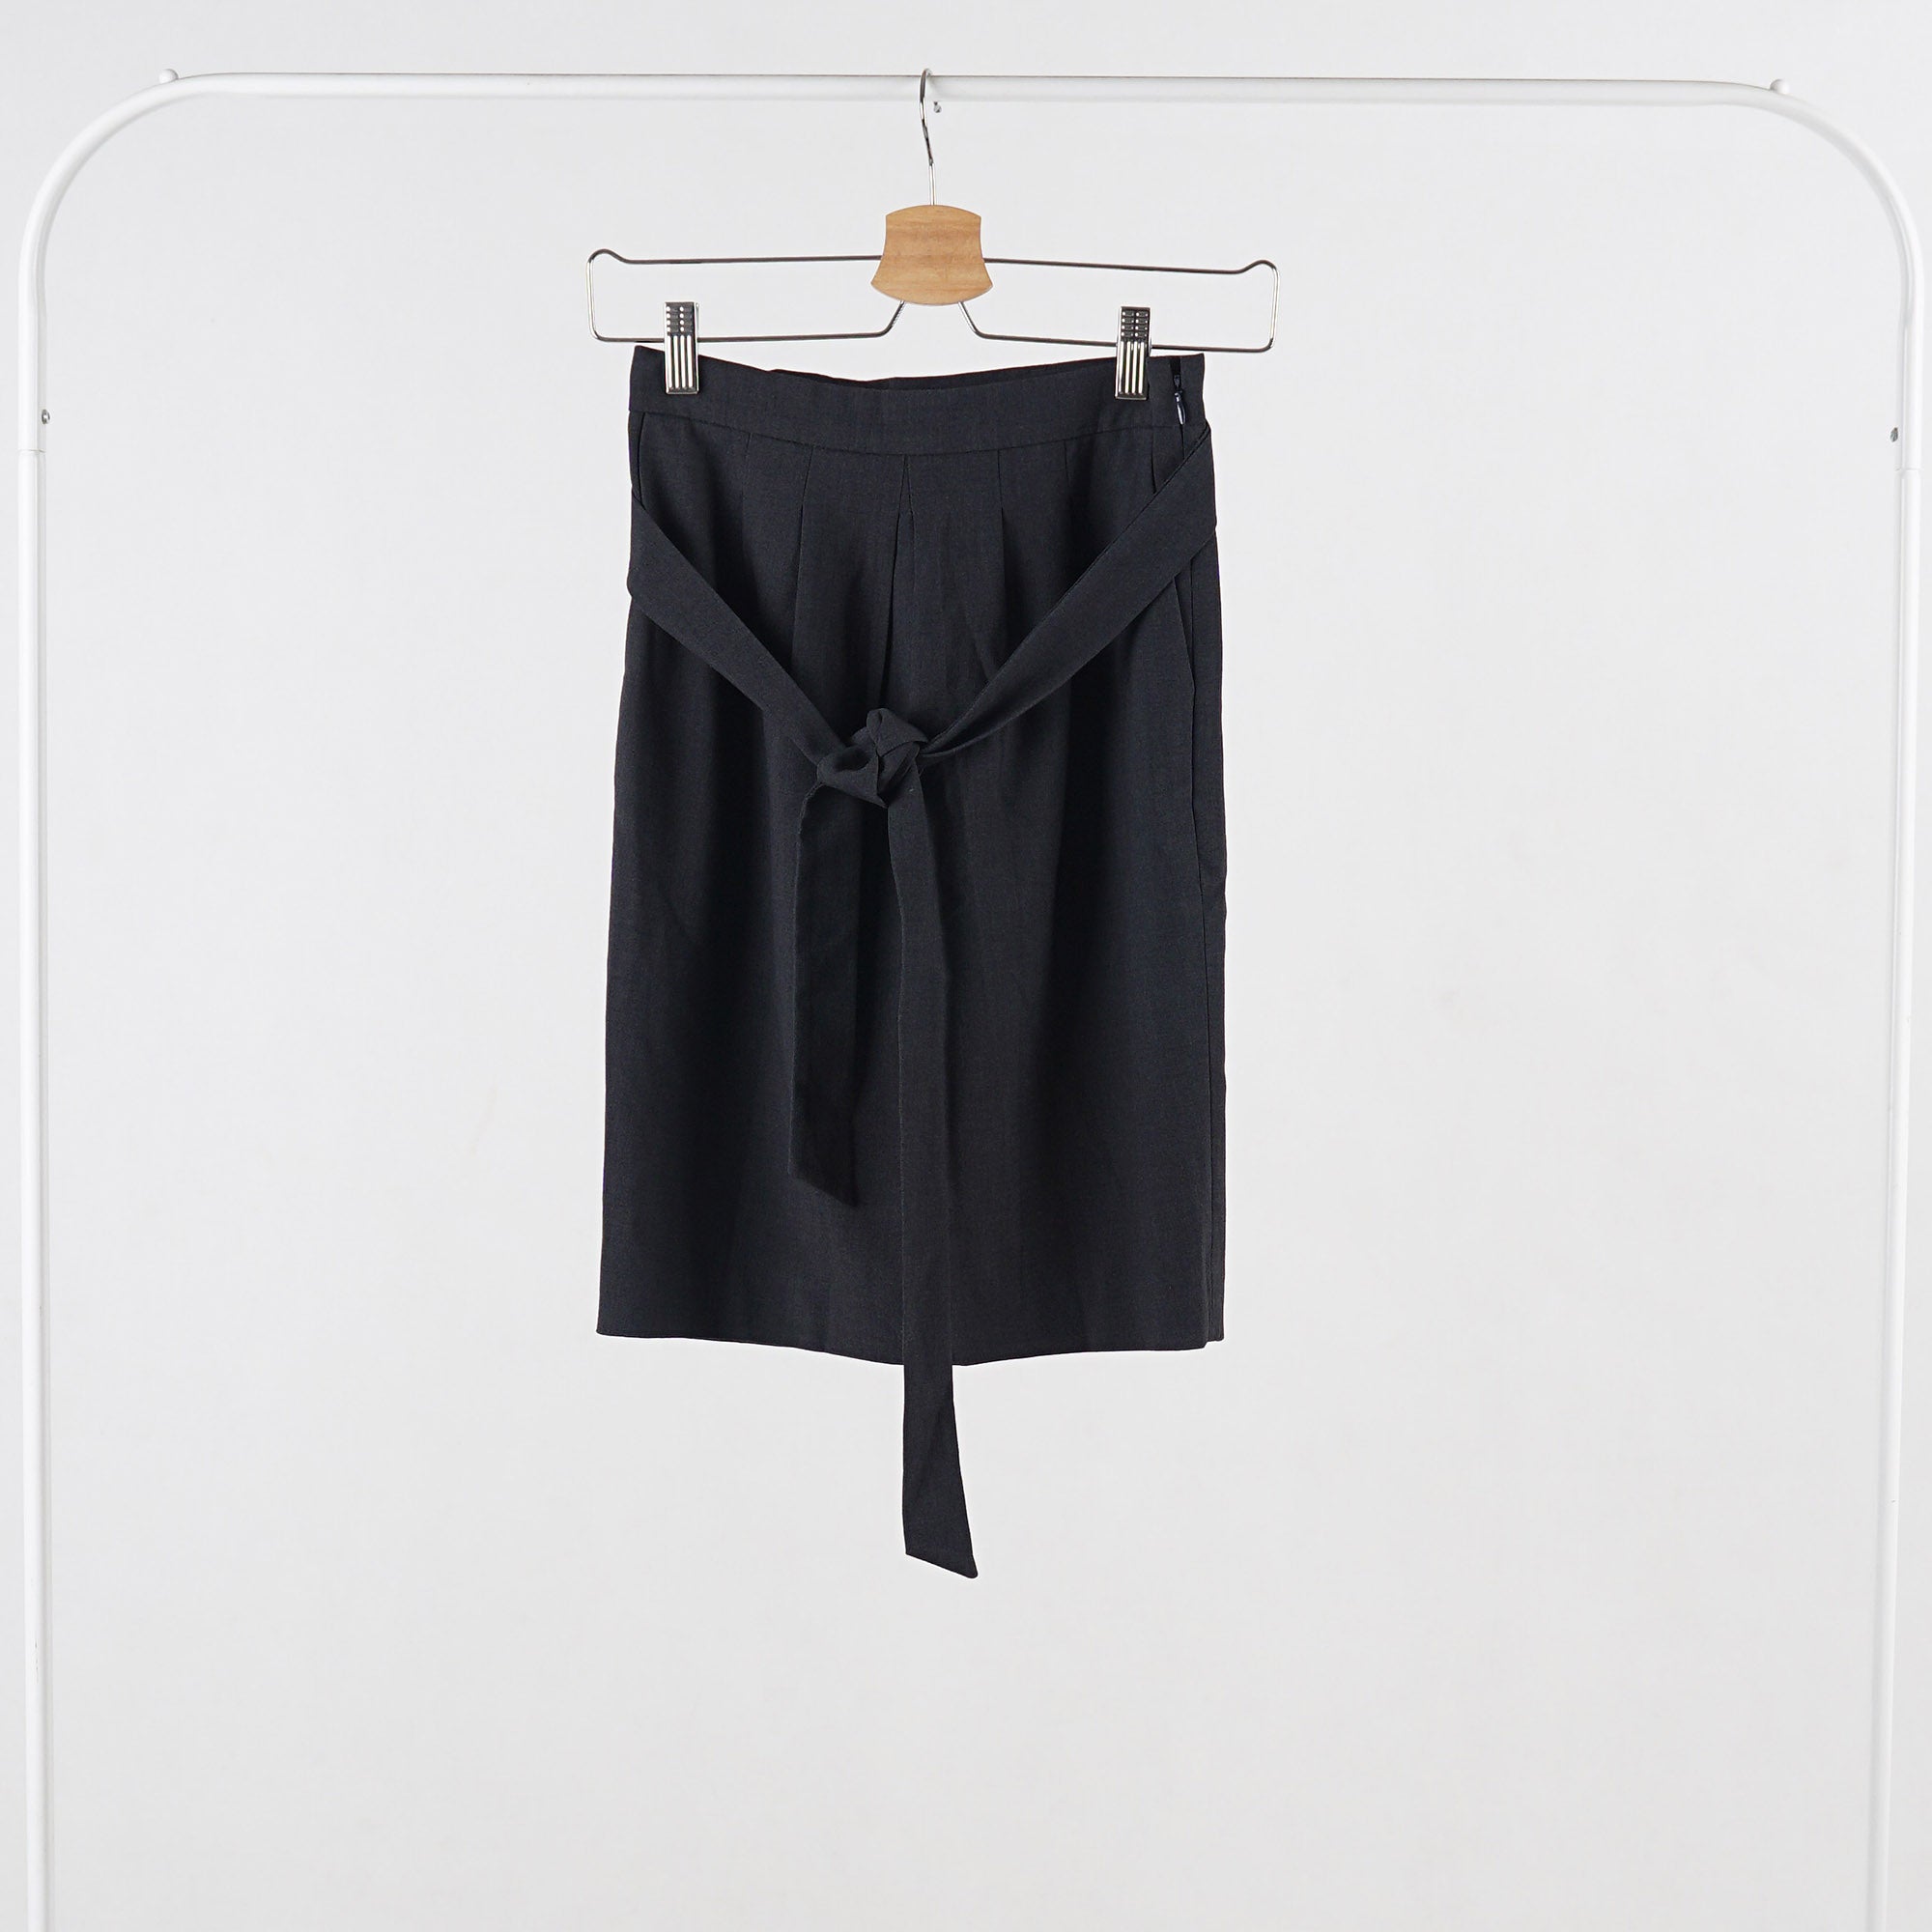 Rok Wanita - Dark Grey Women Skirt (MAR 08)